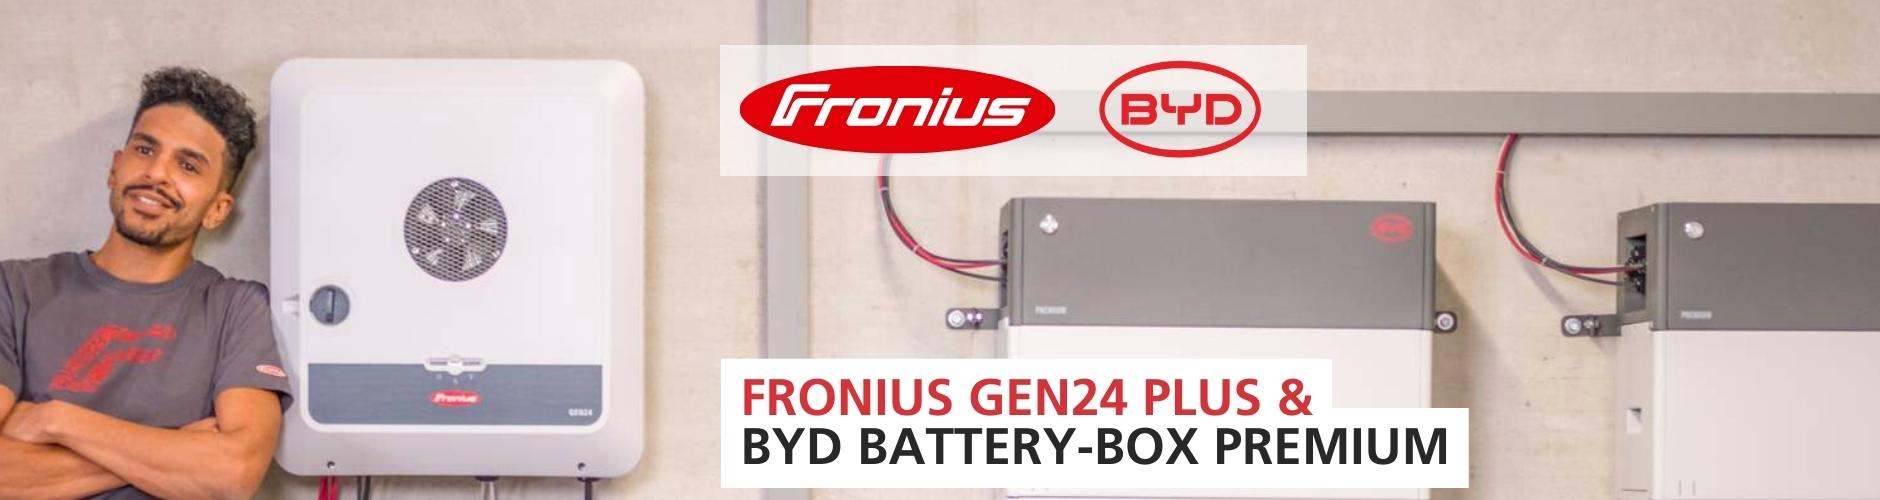 Fronius GEN24 PLUS and BYD Battery-Box Premium